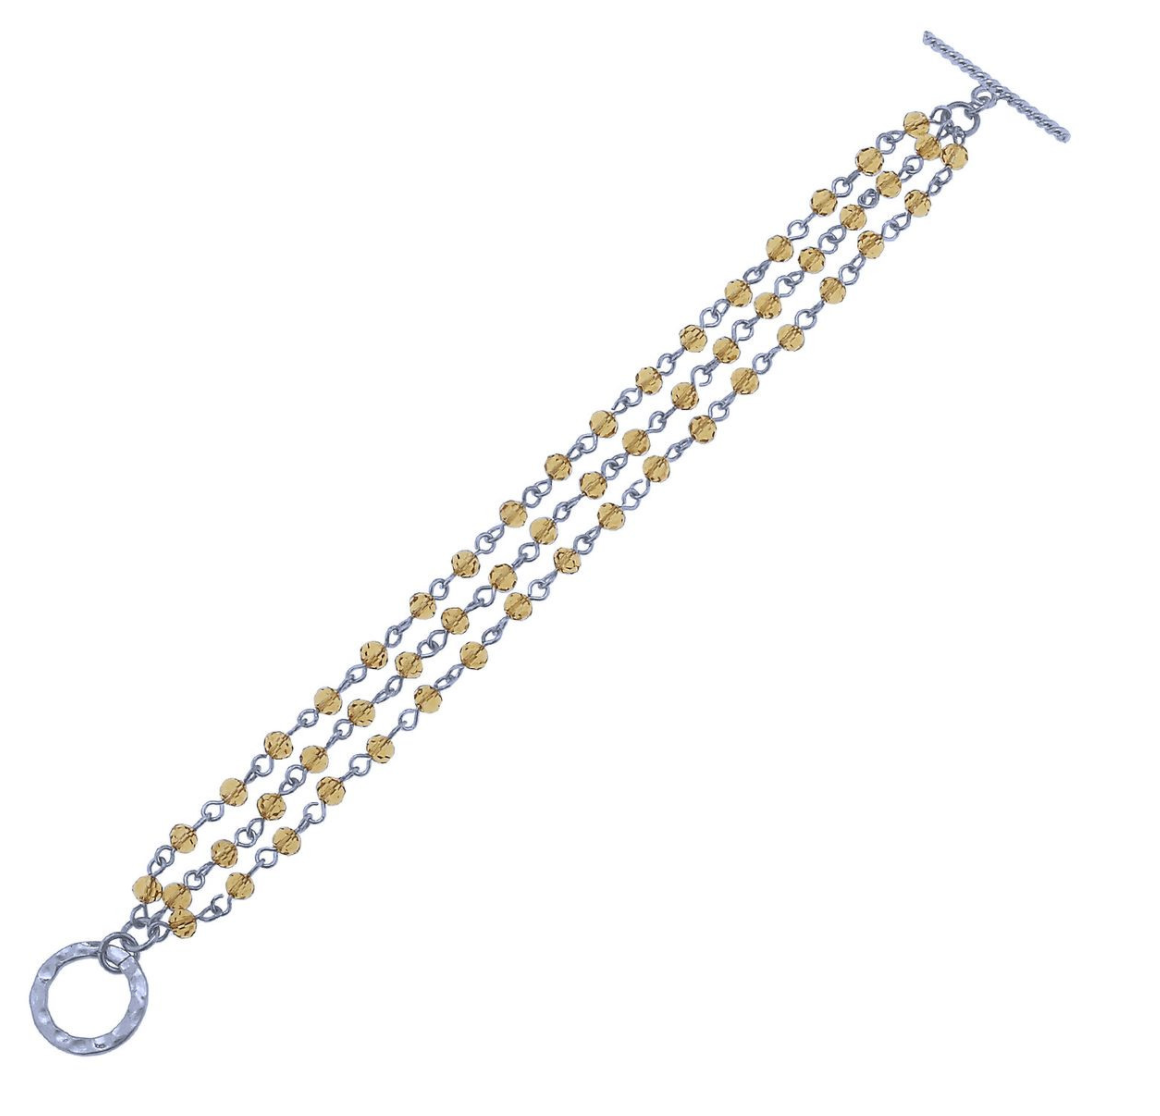 Linked Toggle Bracelet Collection